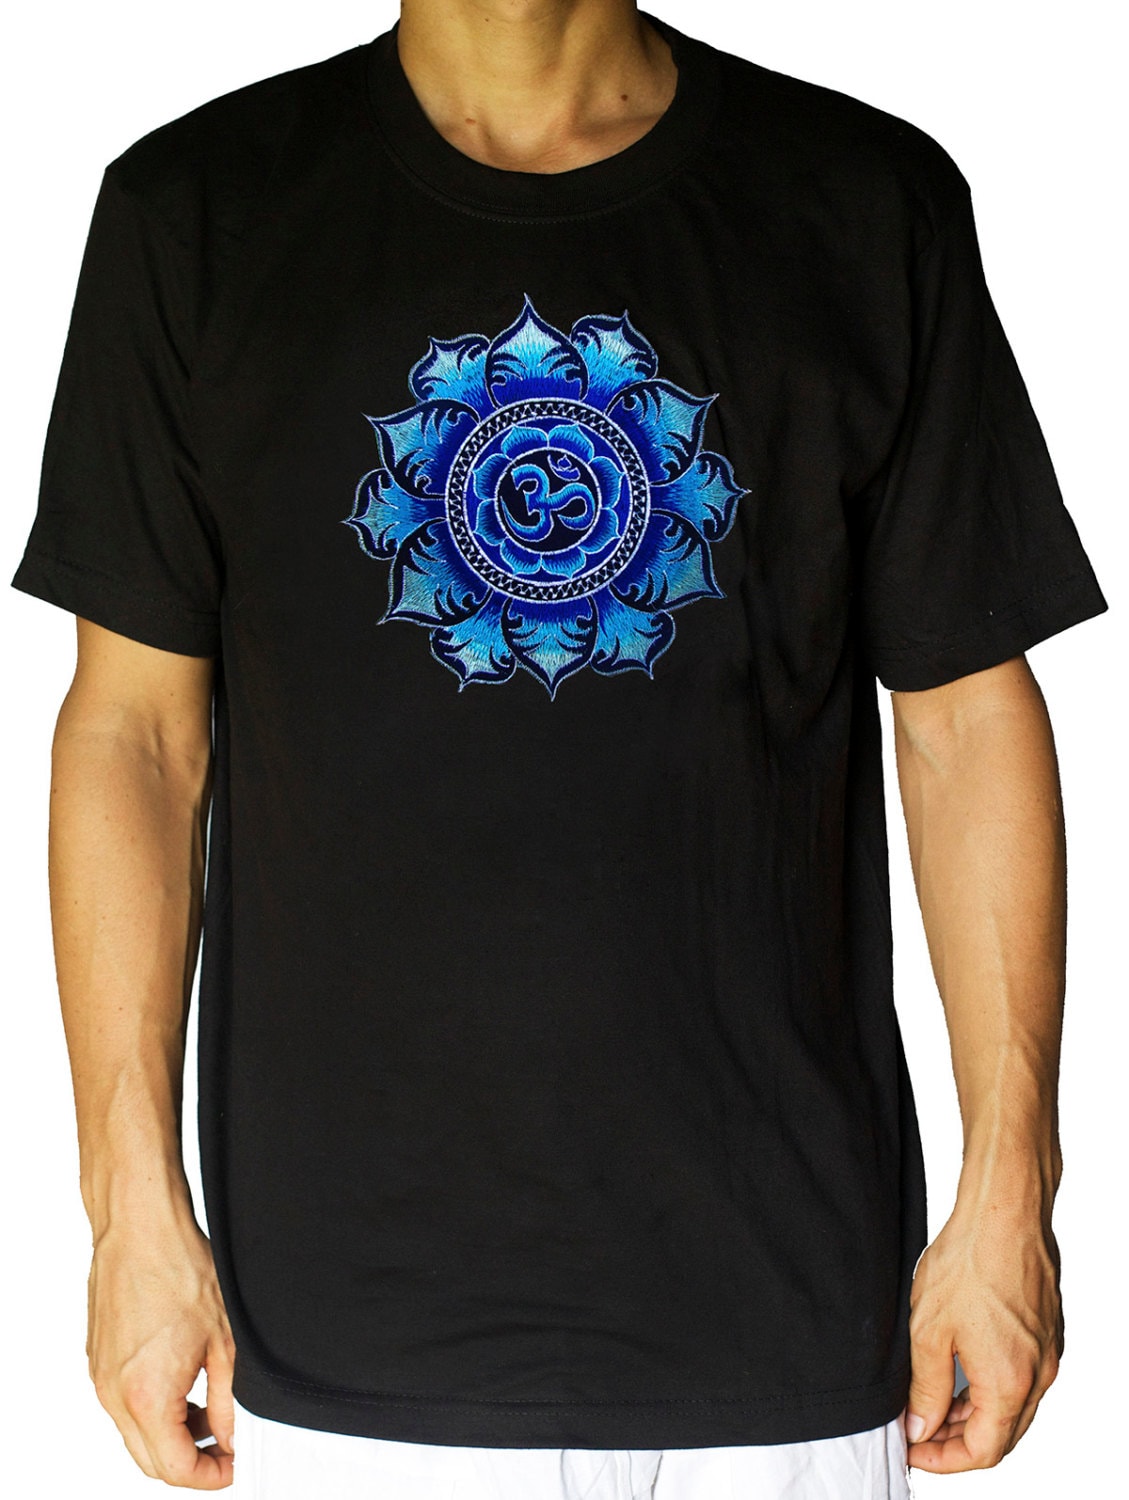 Blue AUM T-Shirt blacklight handmade embroidery no print OM yantra goa t-shirt